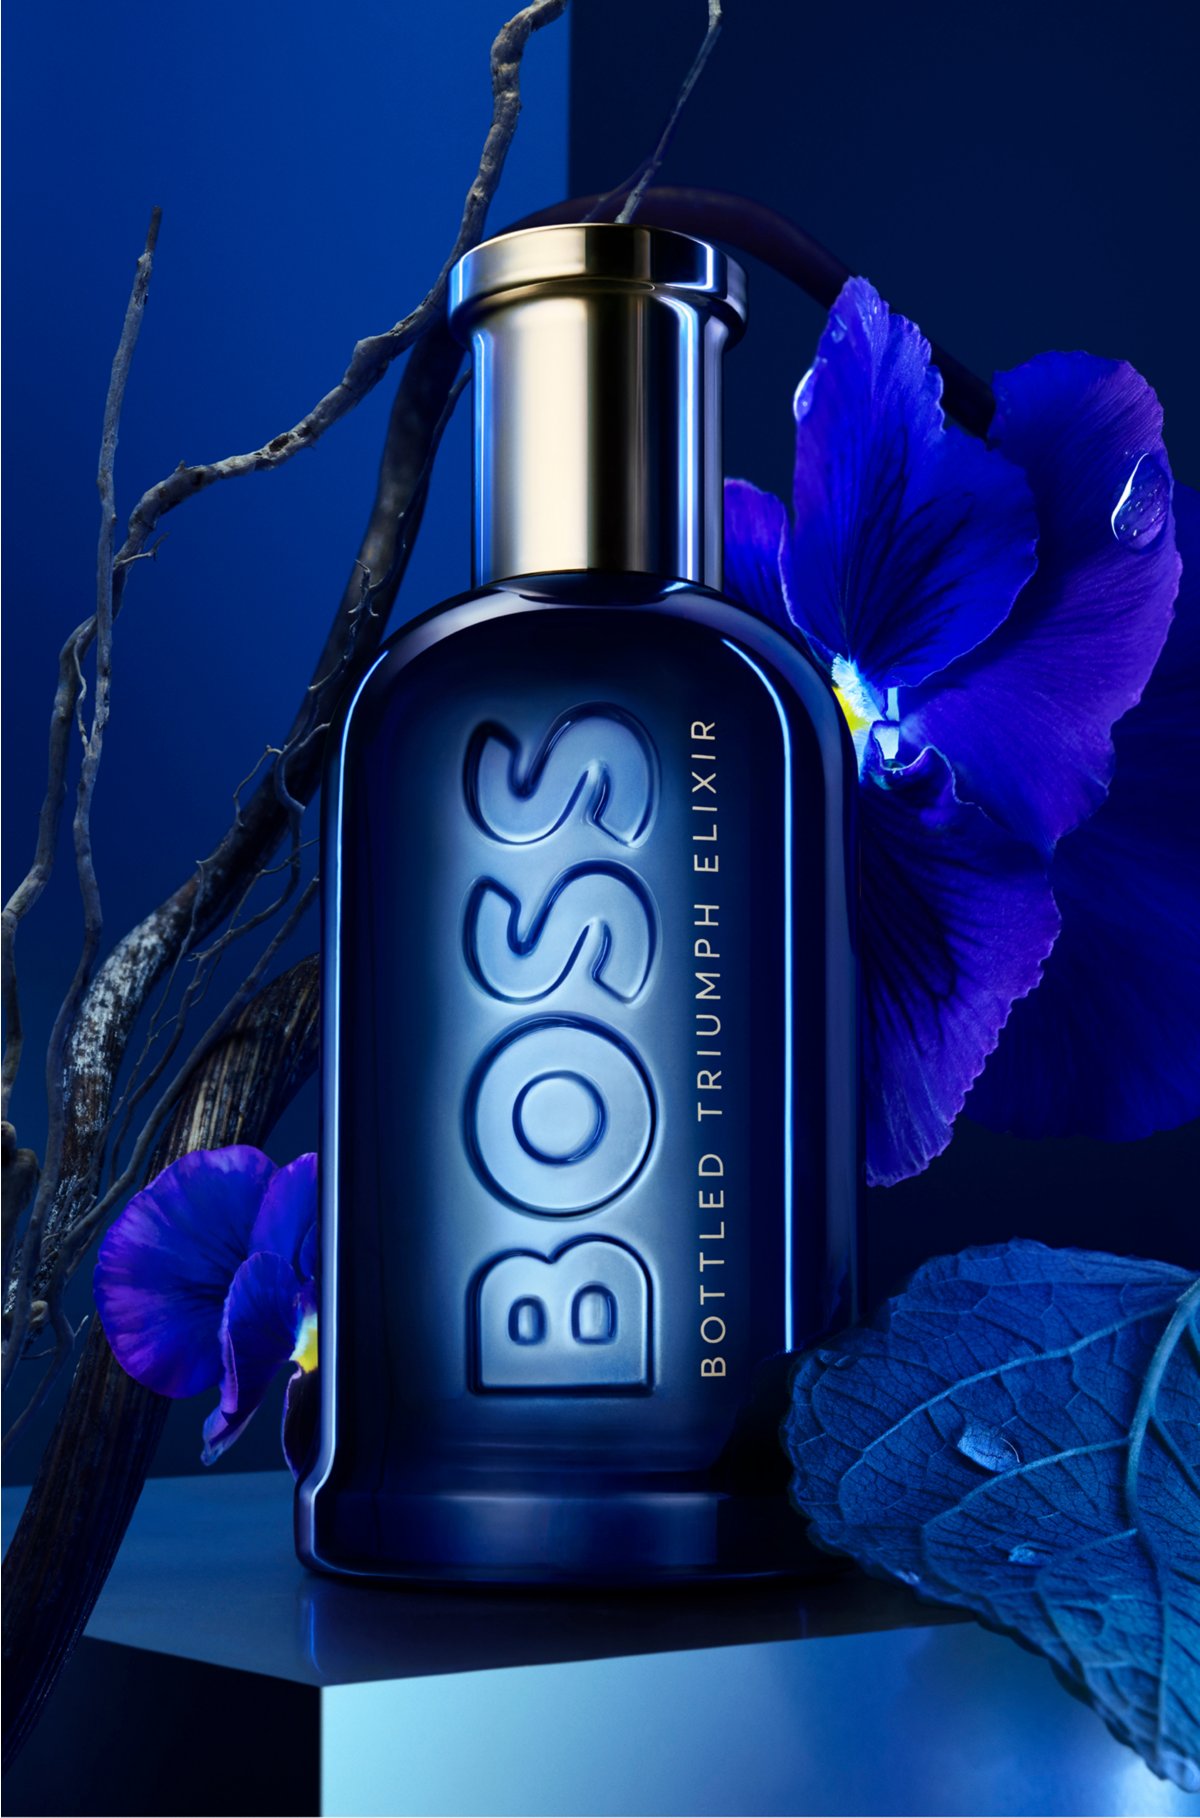 BOSS Bottled Triumph Elixir eau de parfum 100ml, Assorted-Pre-Pack